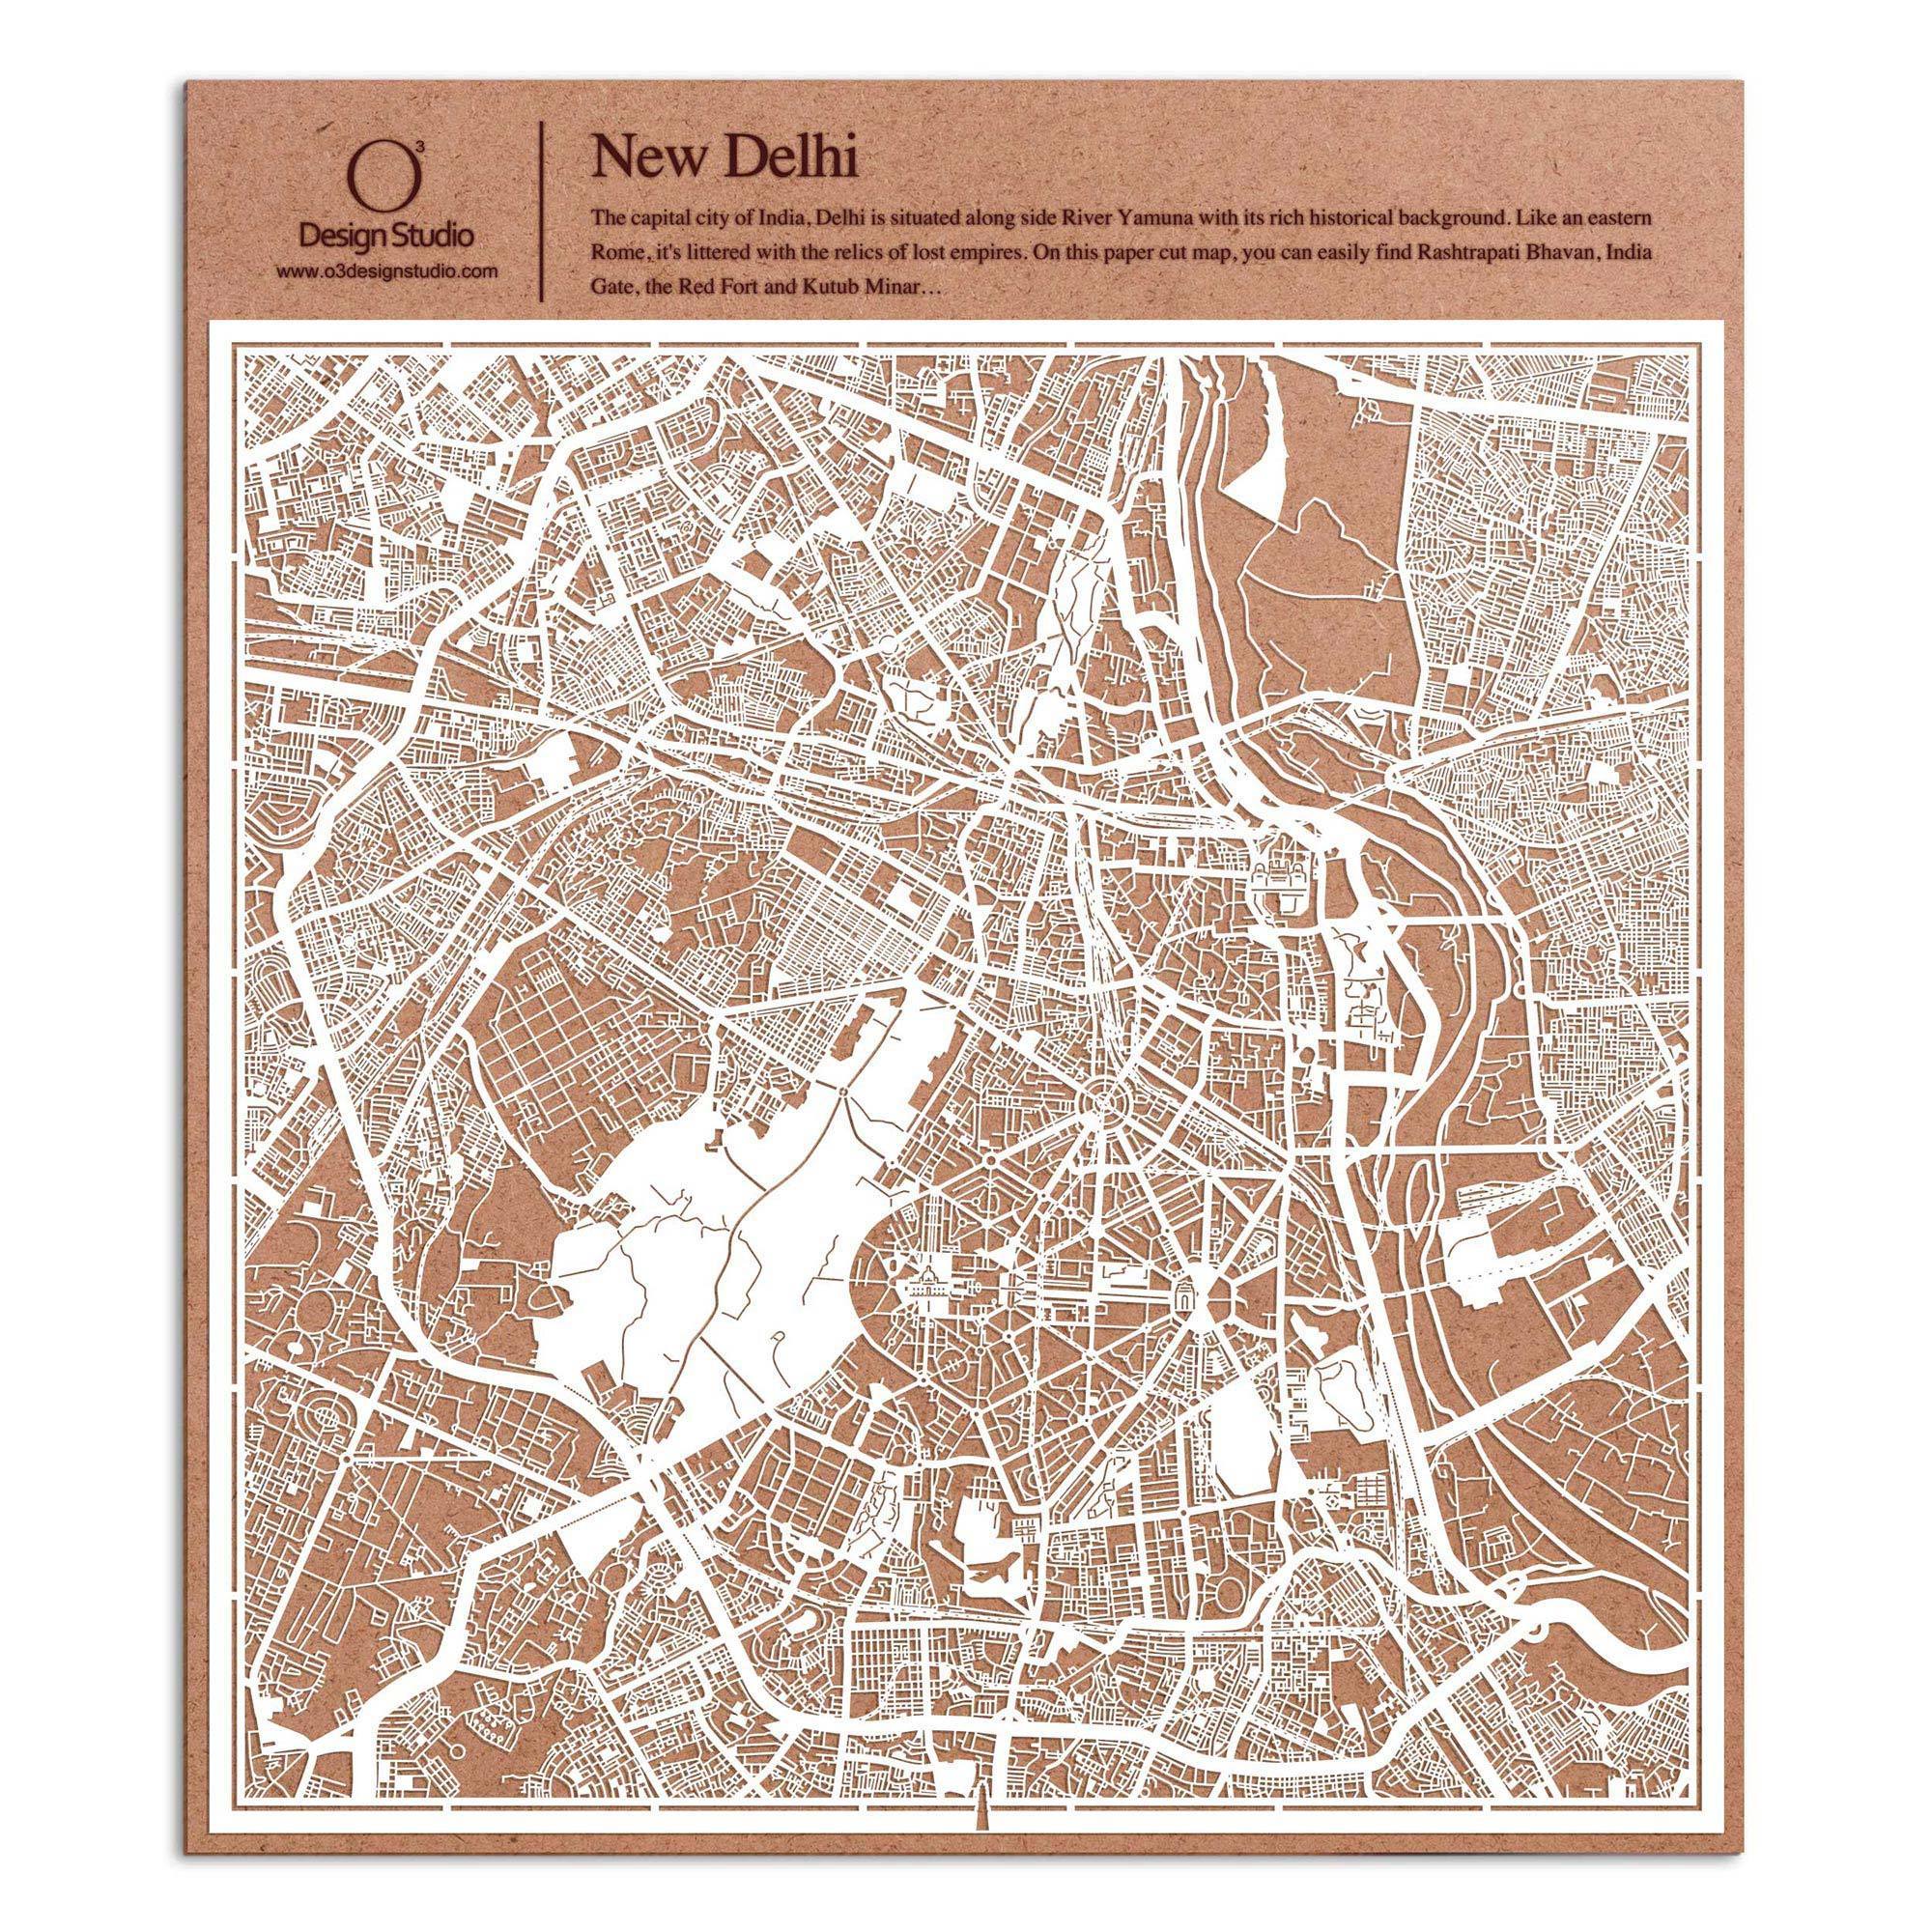 o3designstudio paper cut map New Delhi White map art MU1015W